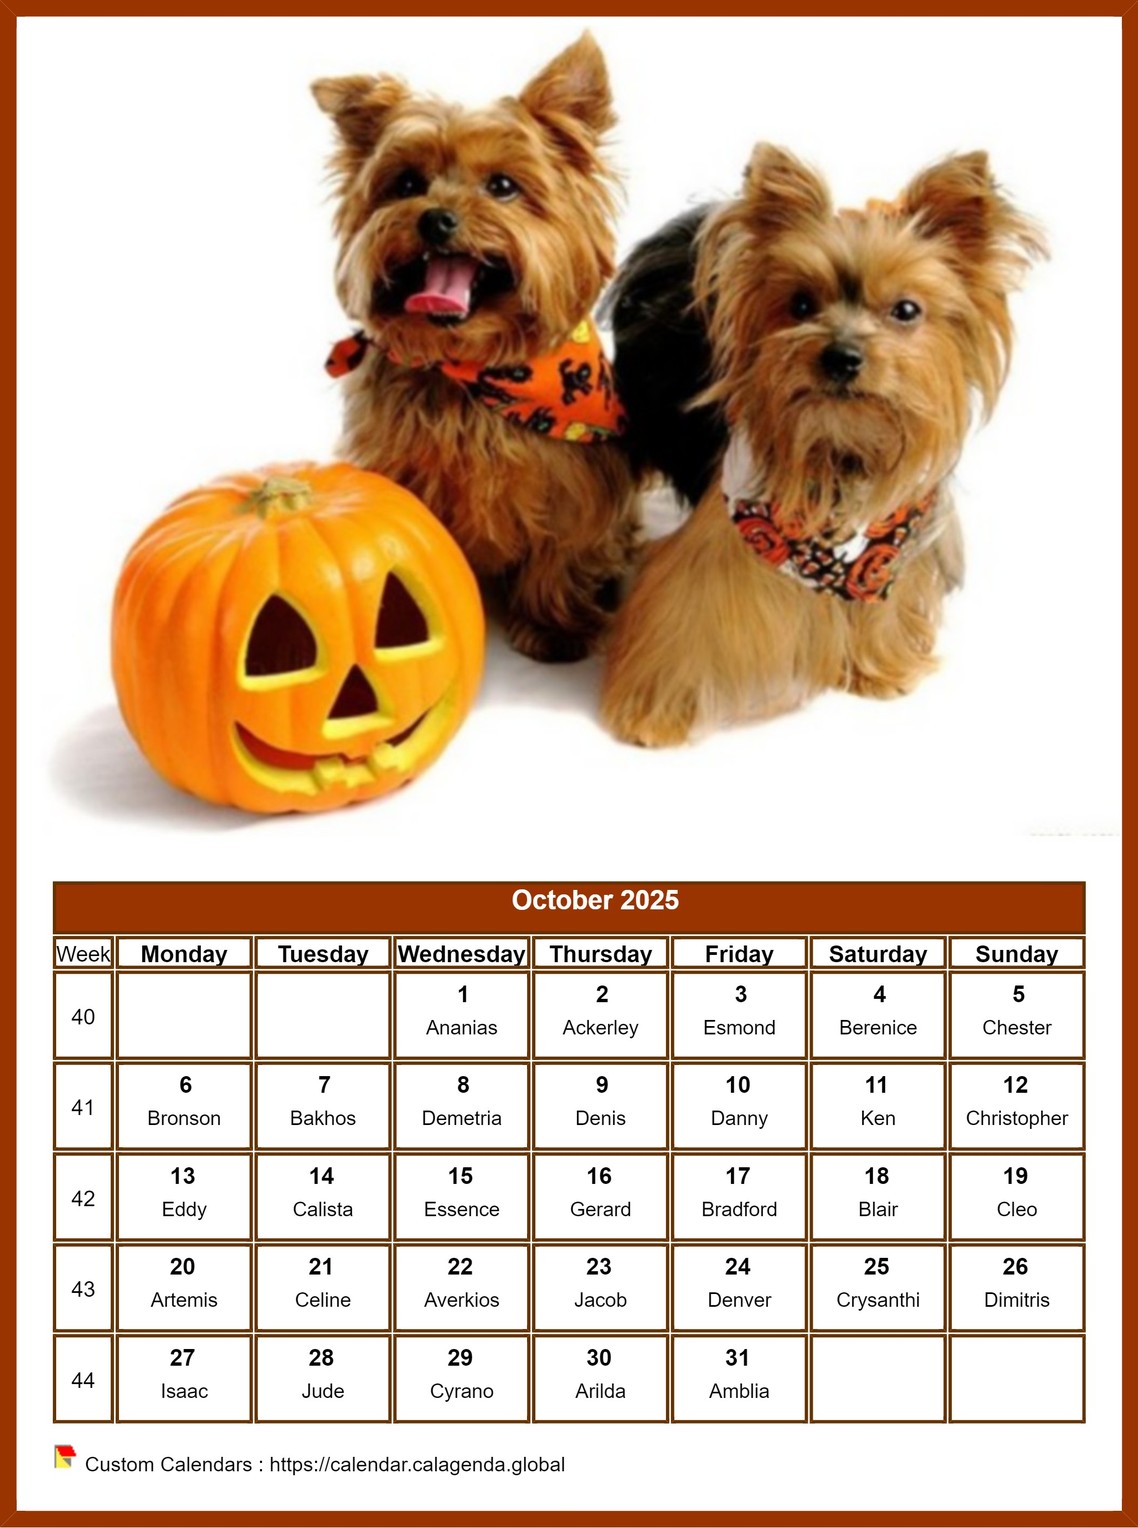 Calendar October 2025 dogs